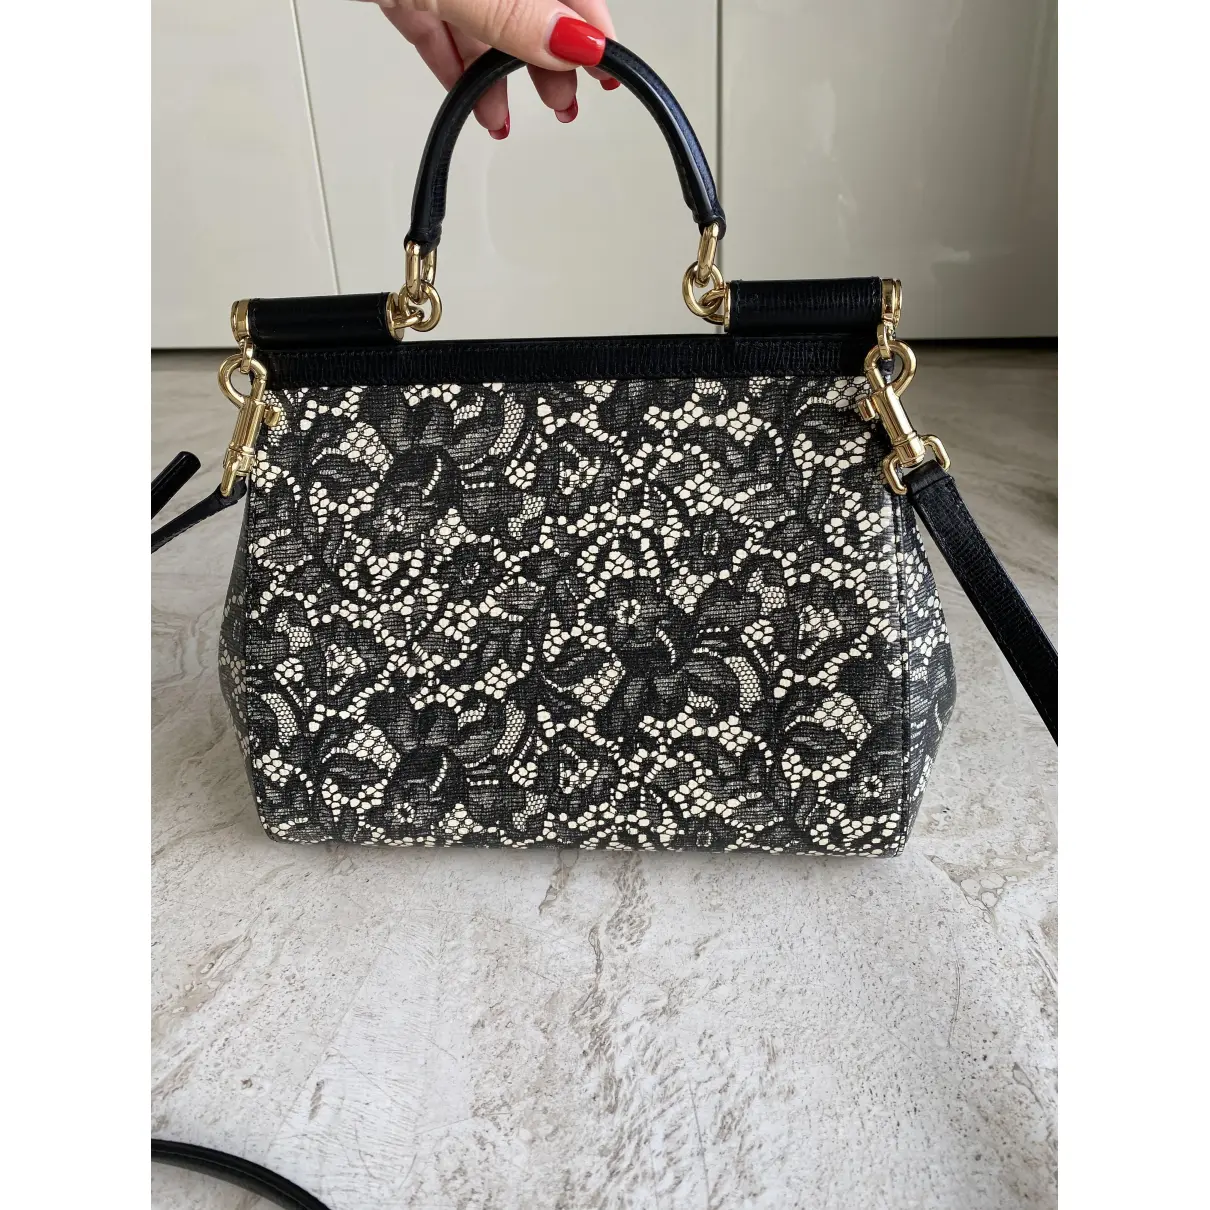 Buy Dolce & Gabbana Sicily leather handbag online